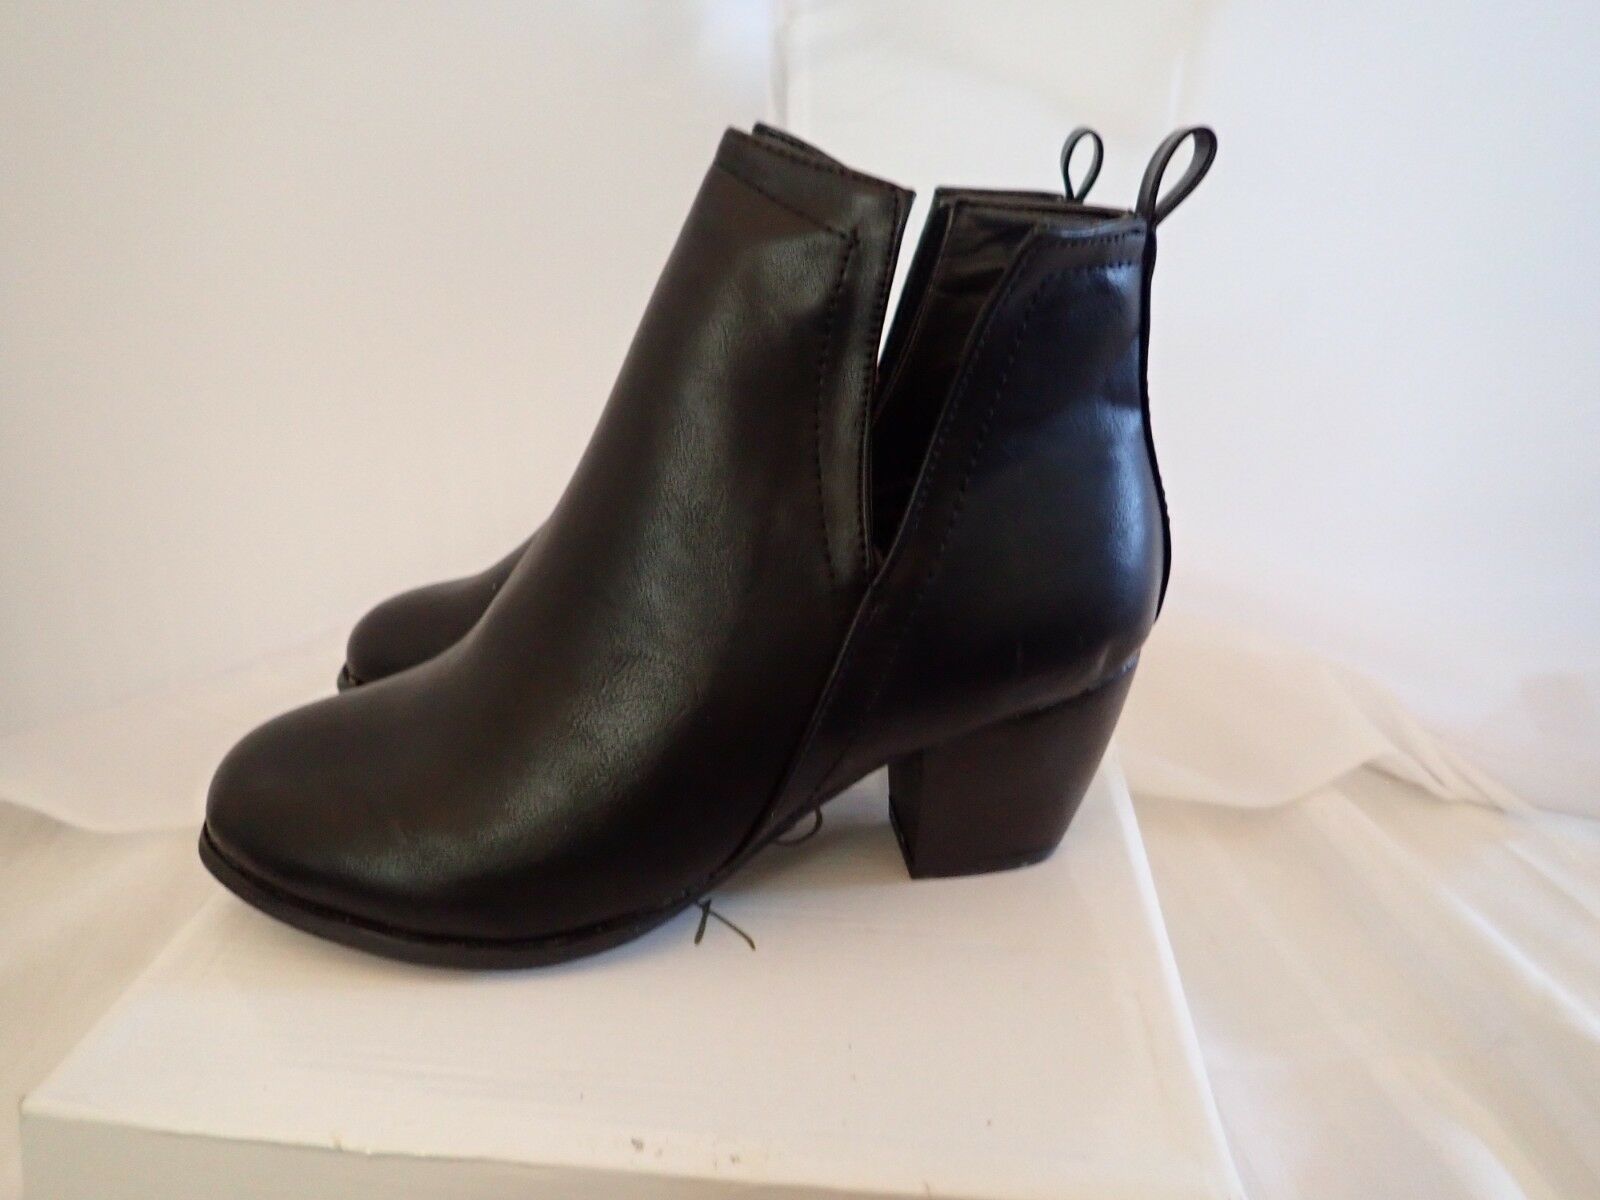 Shoes of Soul L5199A Women's Block-Heel Booties Black size 6 M - Boots